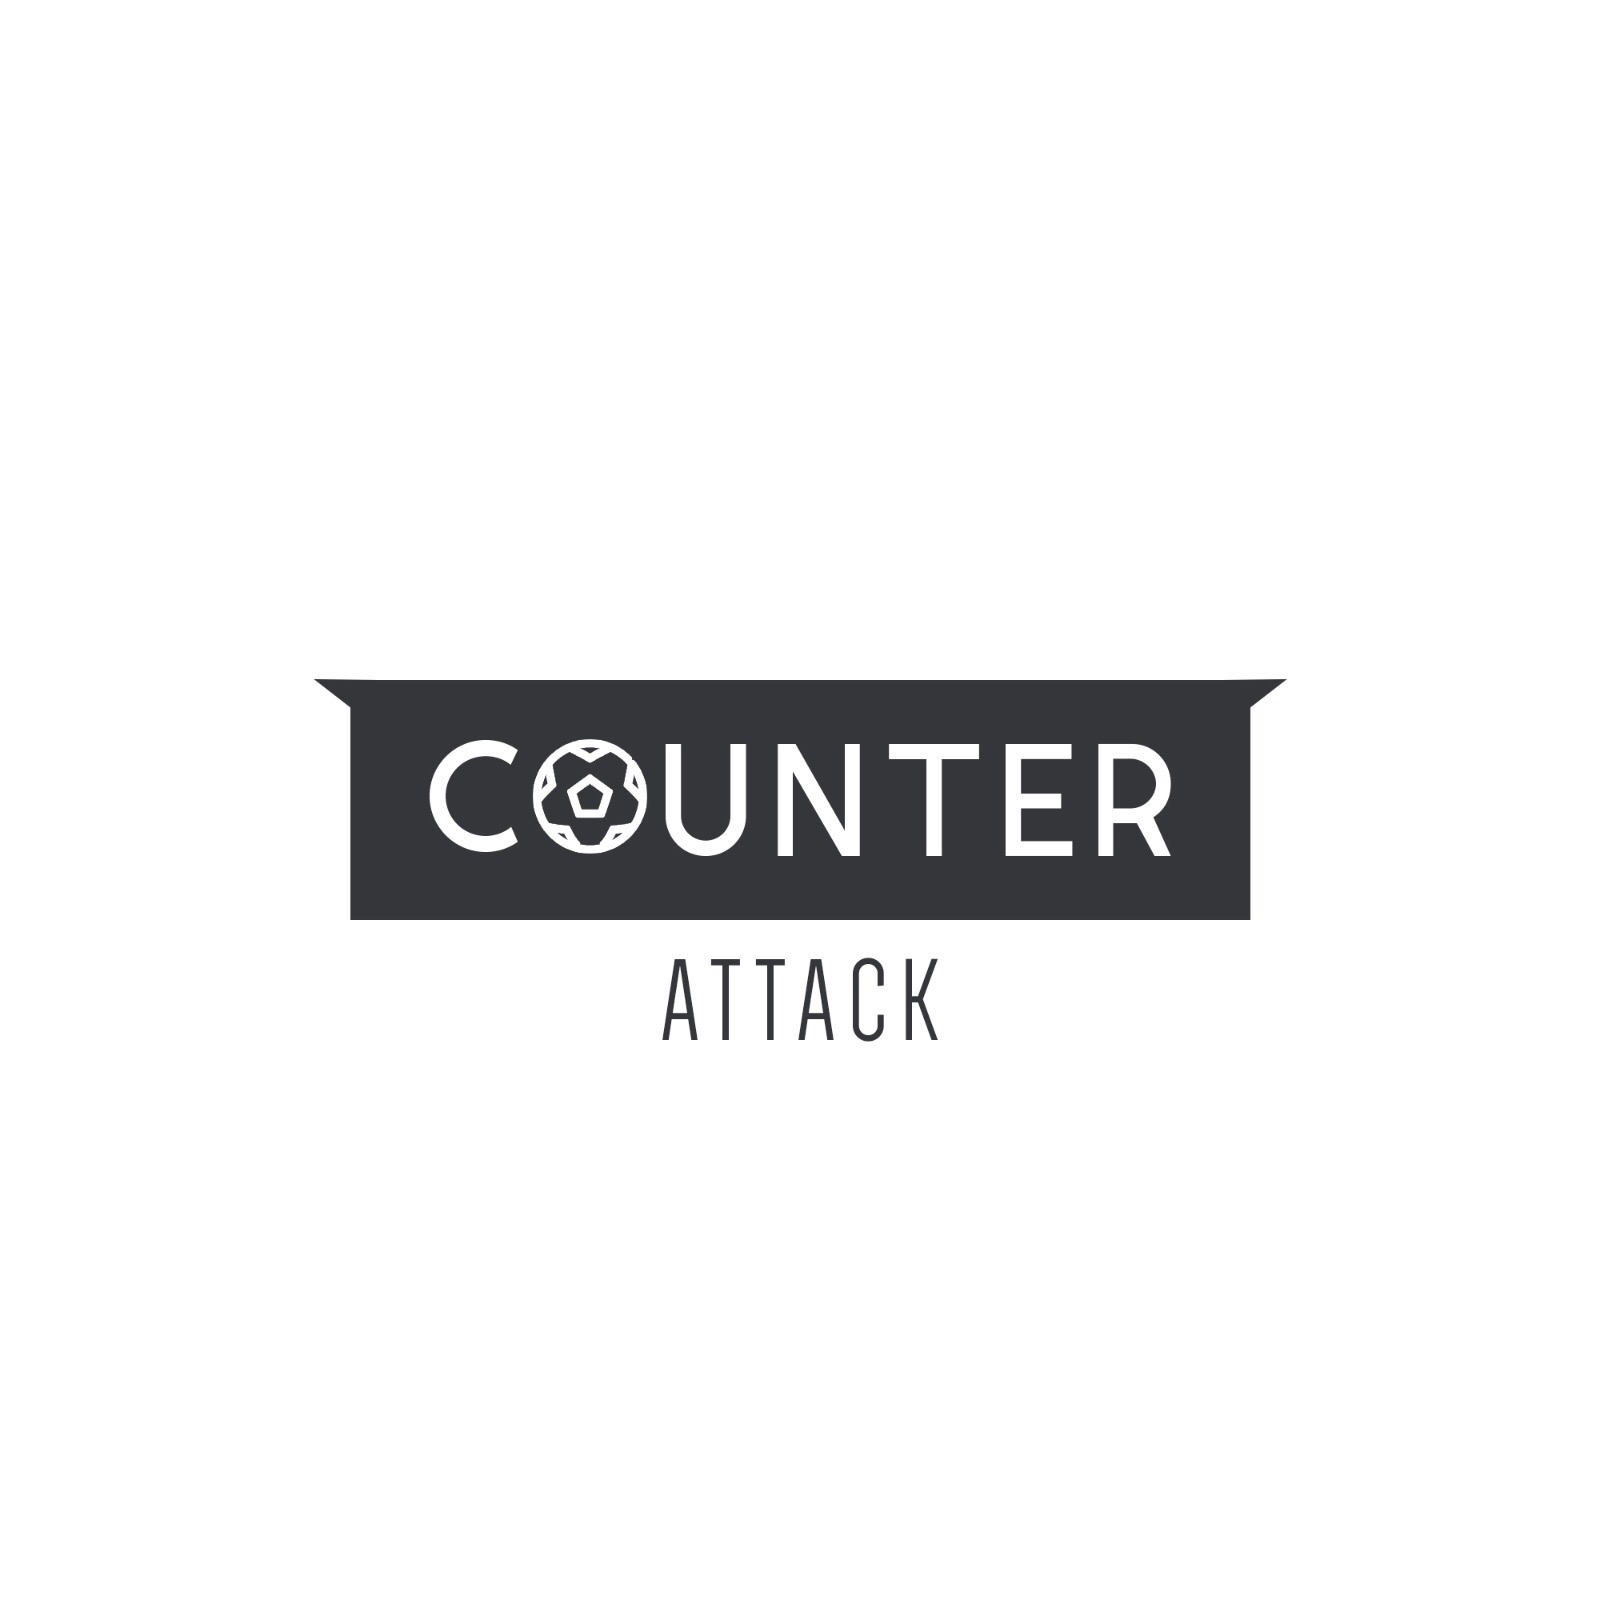 Counter Attack - Episode 44 - Robert Pires or Ryan Giggs?